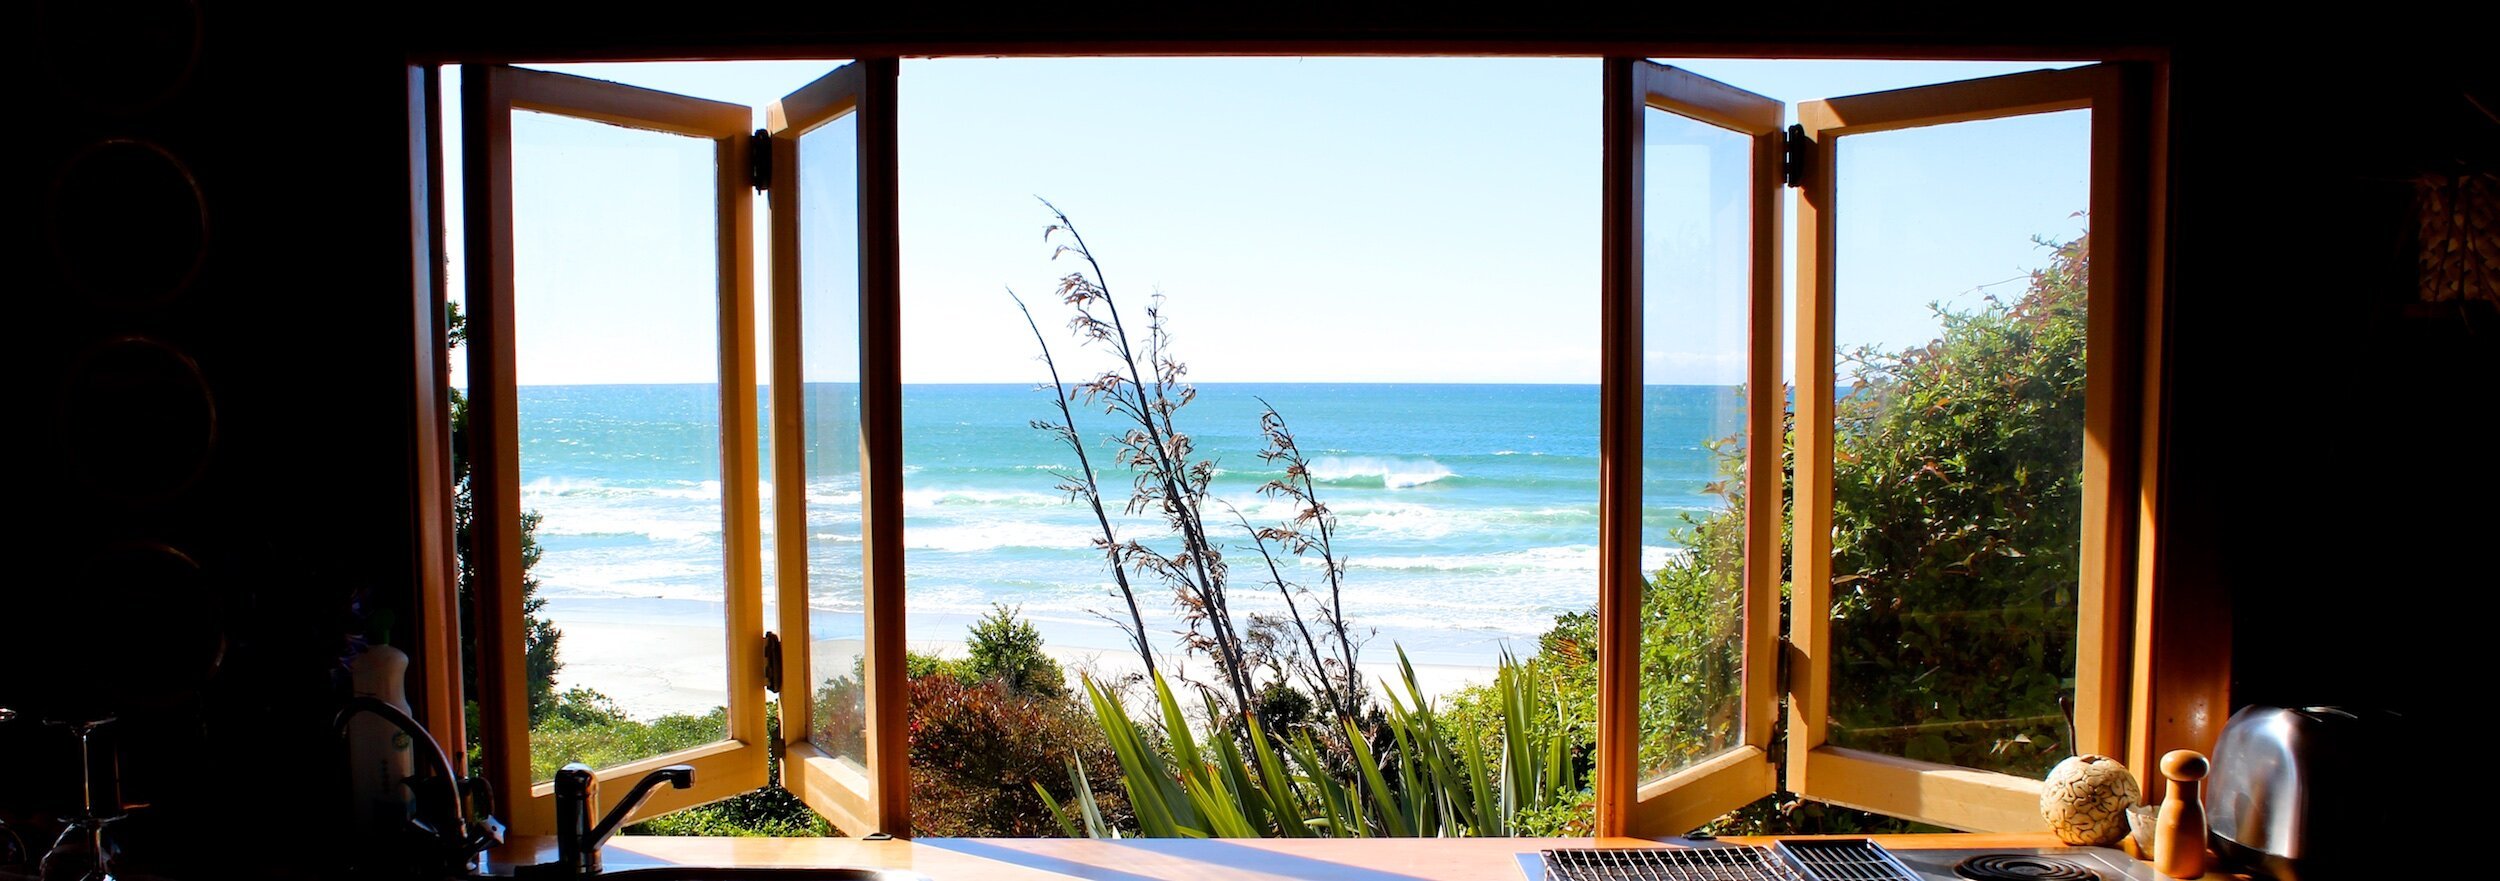 Dunedin+Window.jpg